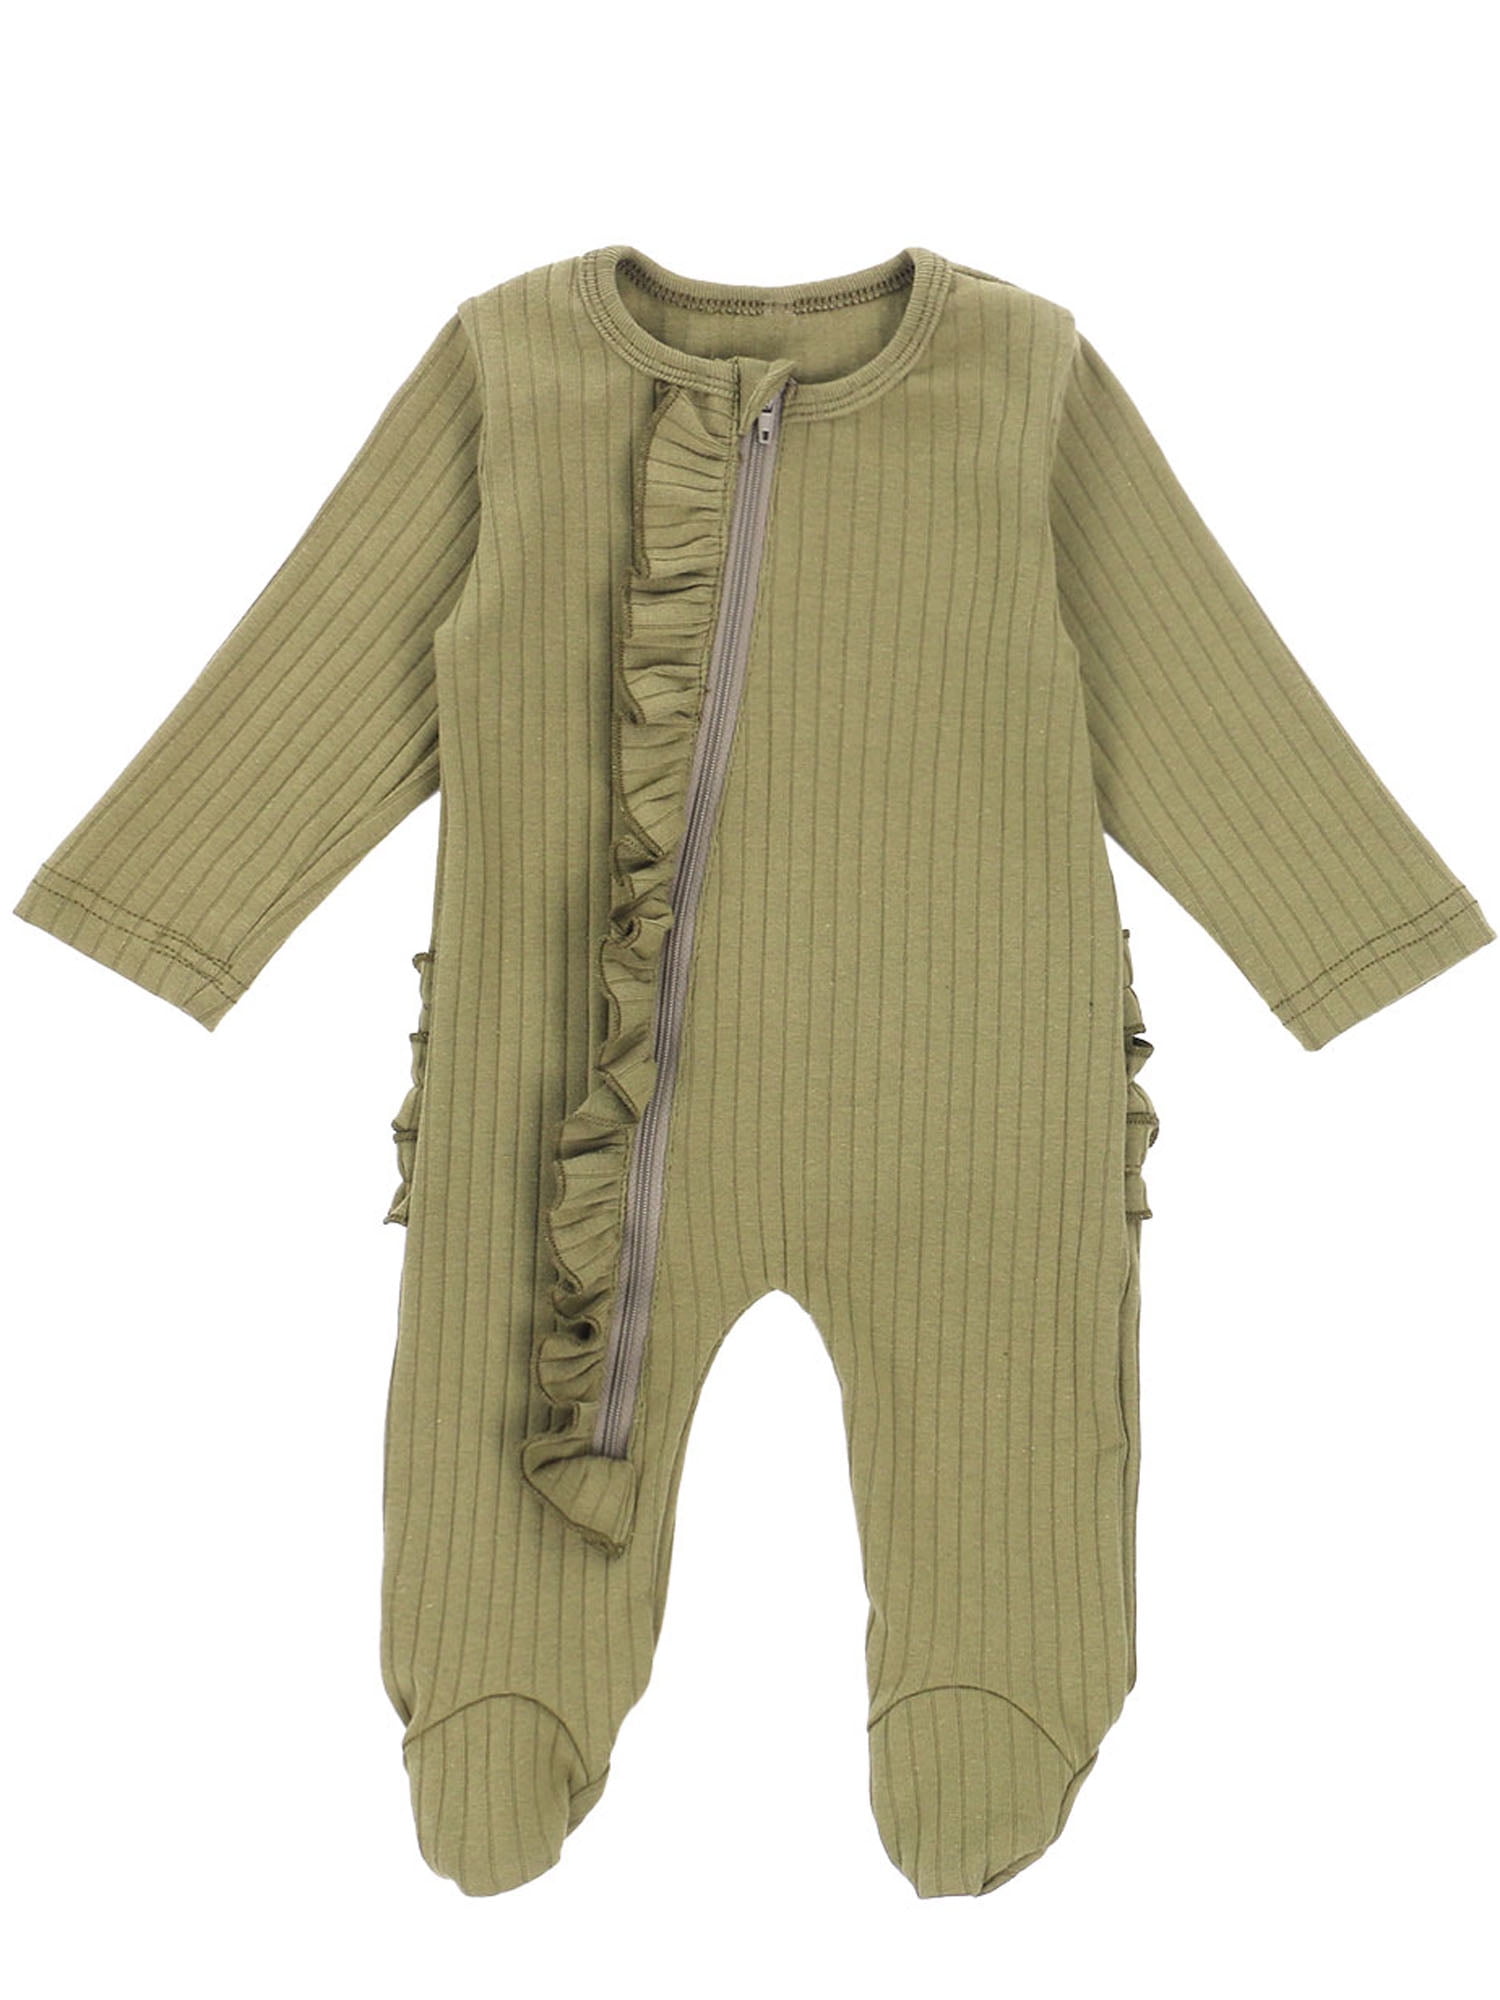 Unisex Newbron Baby Footed Pajamas Sleeper Infant Ruffle One-Piece Romper Jumpsuit Zipper PJ 